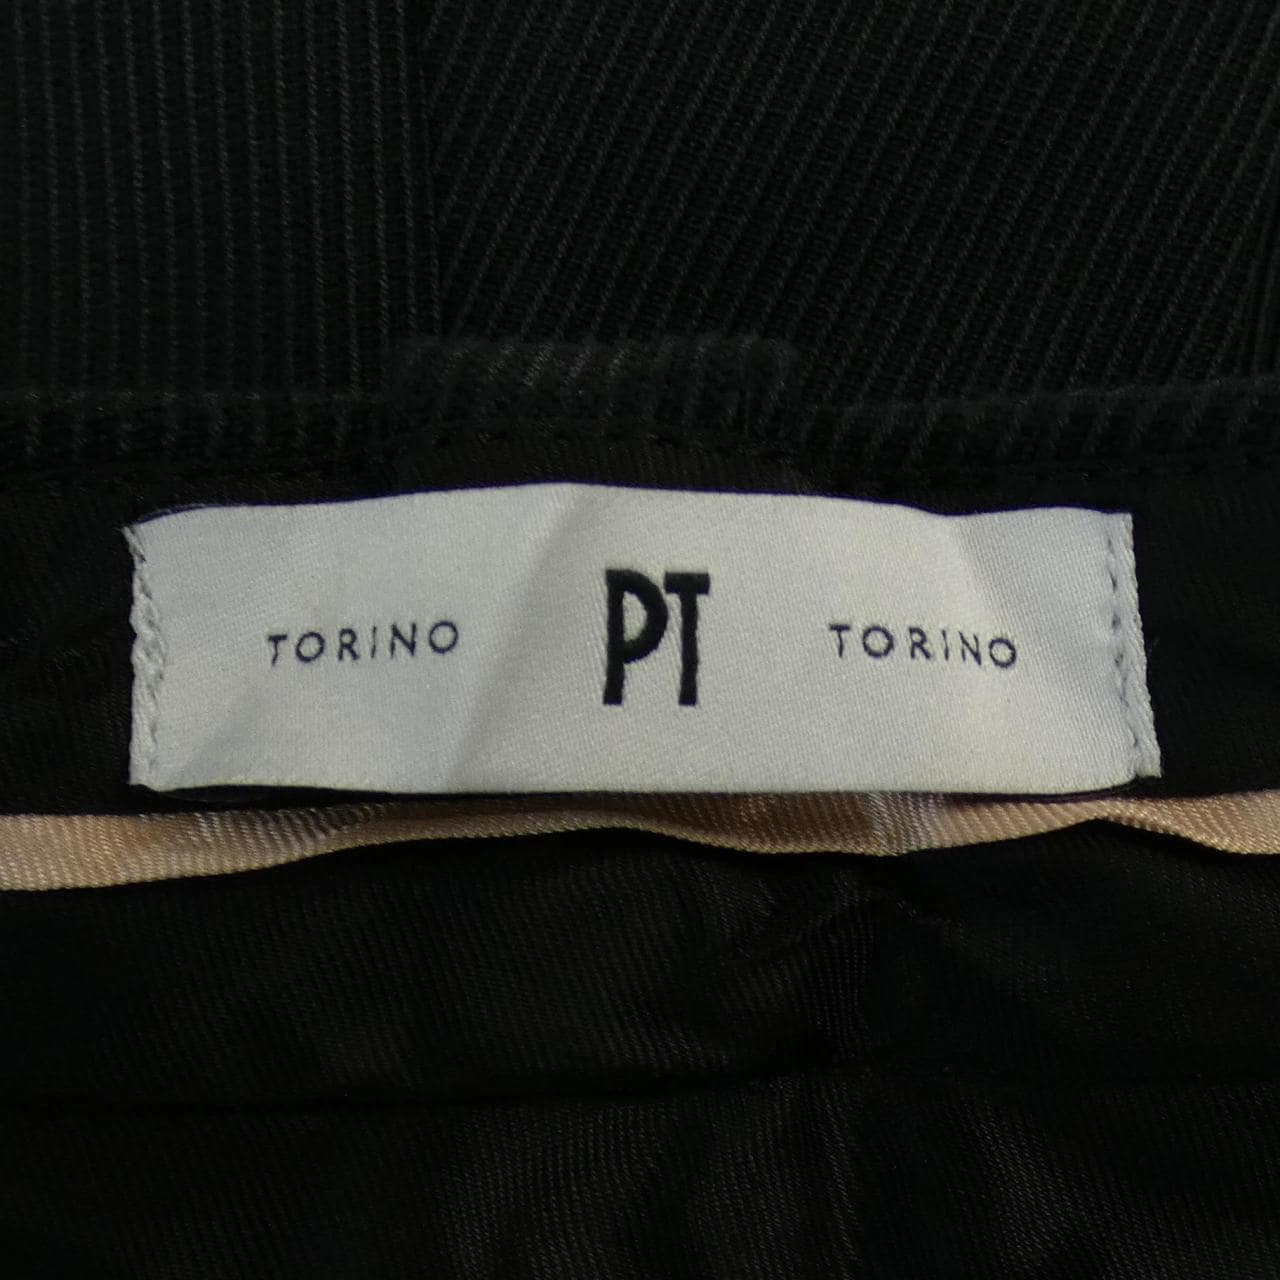 Peaty Torino PT TORINO Pants